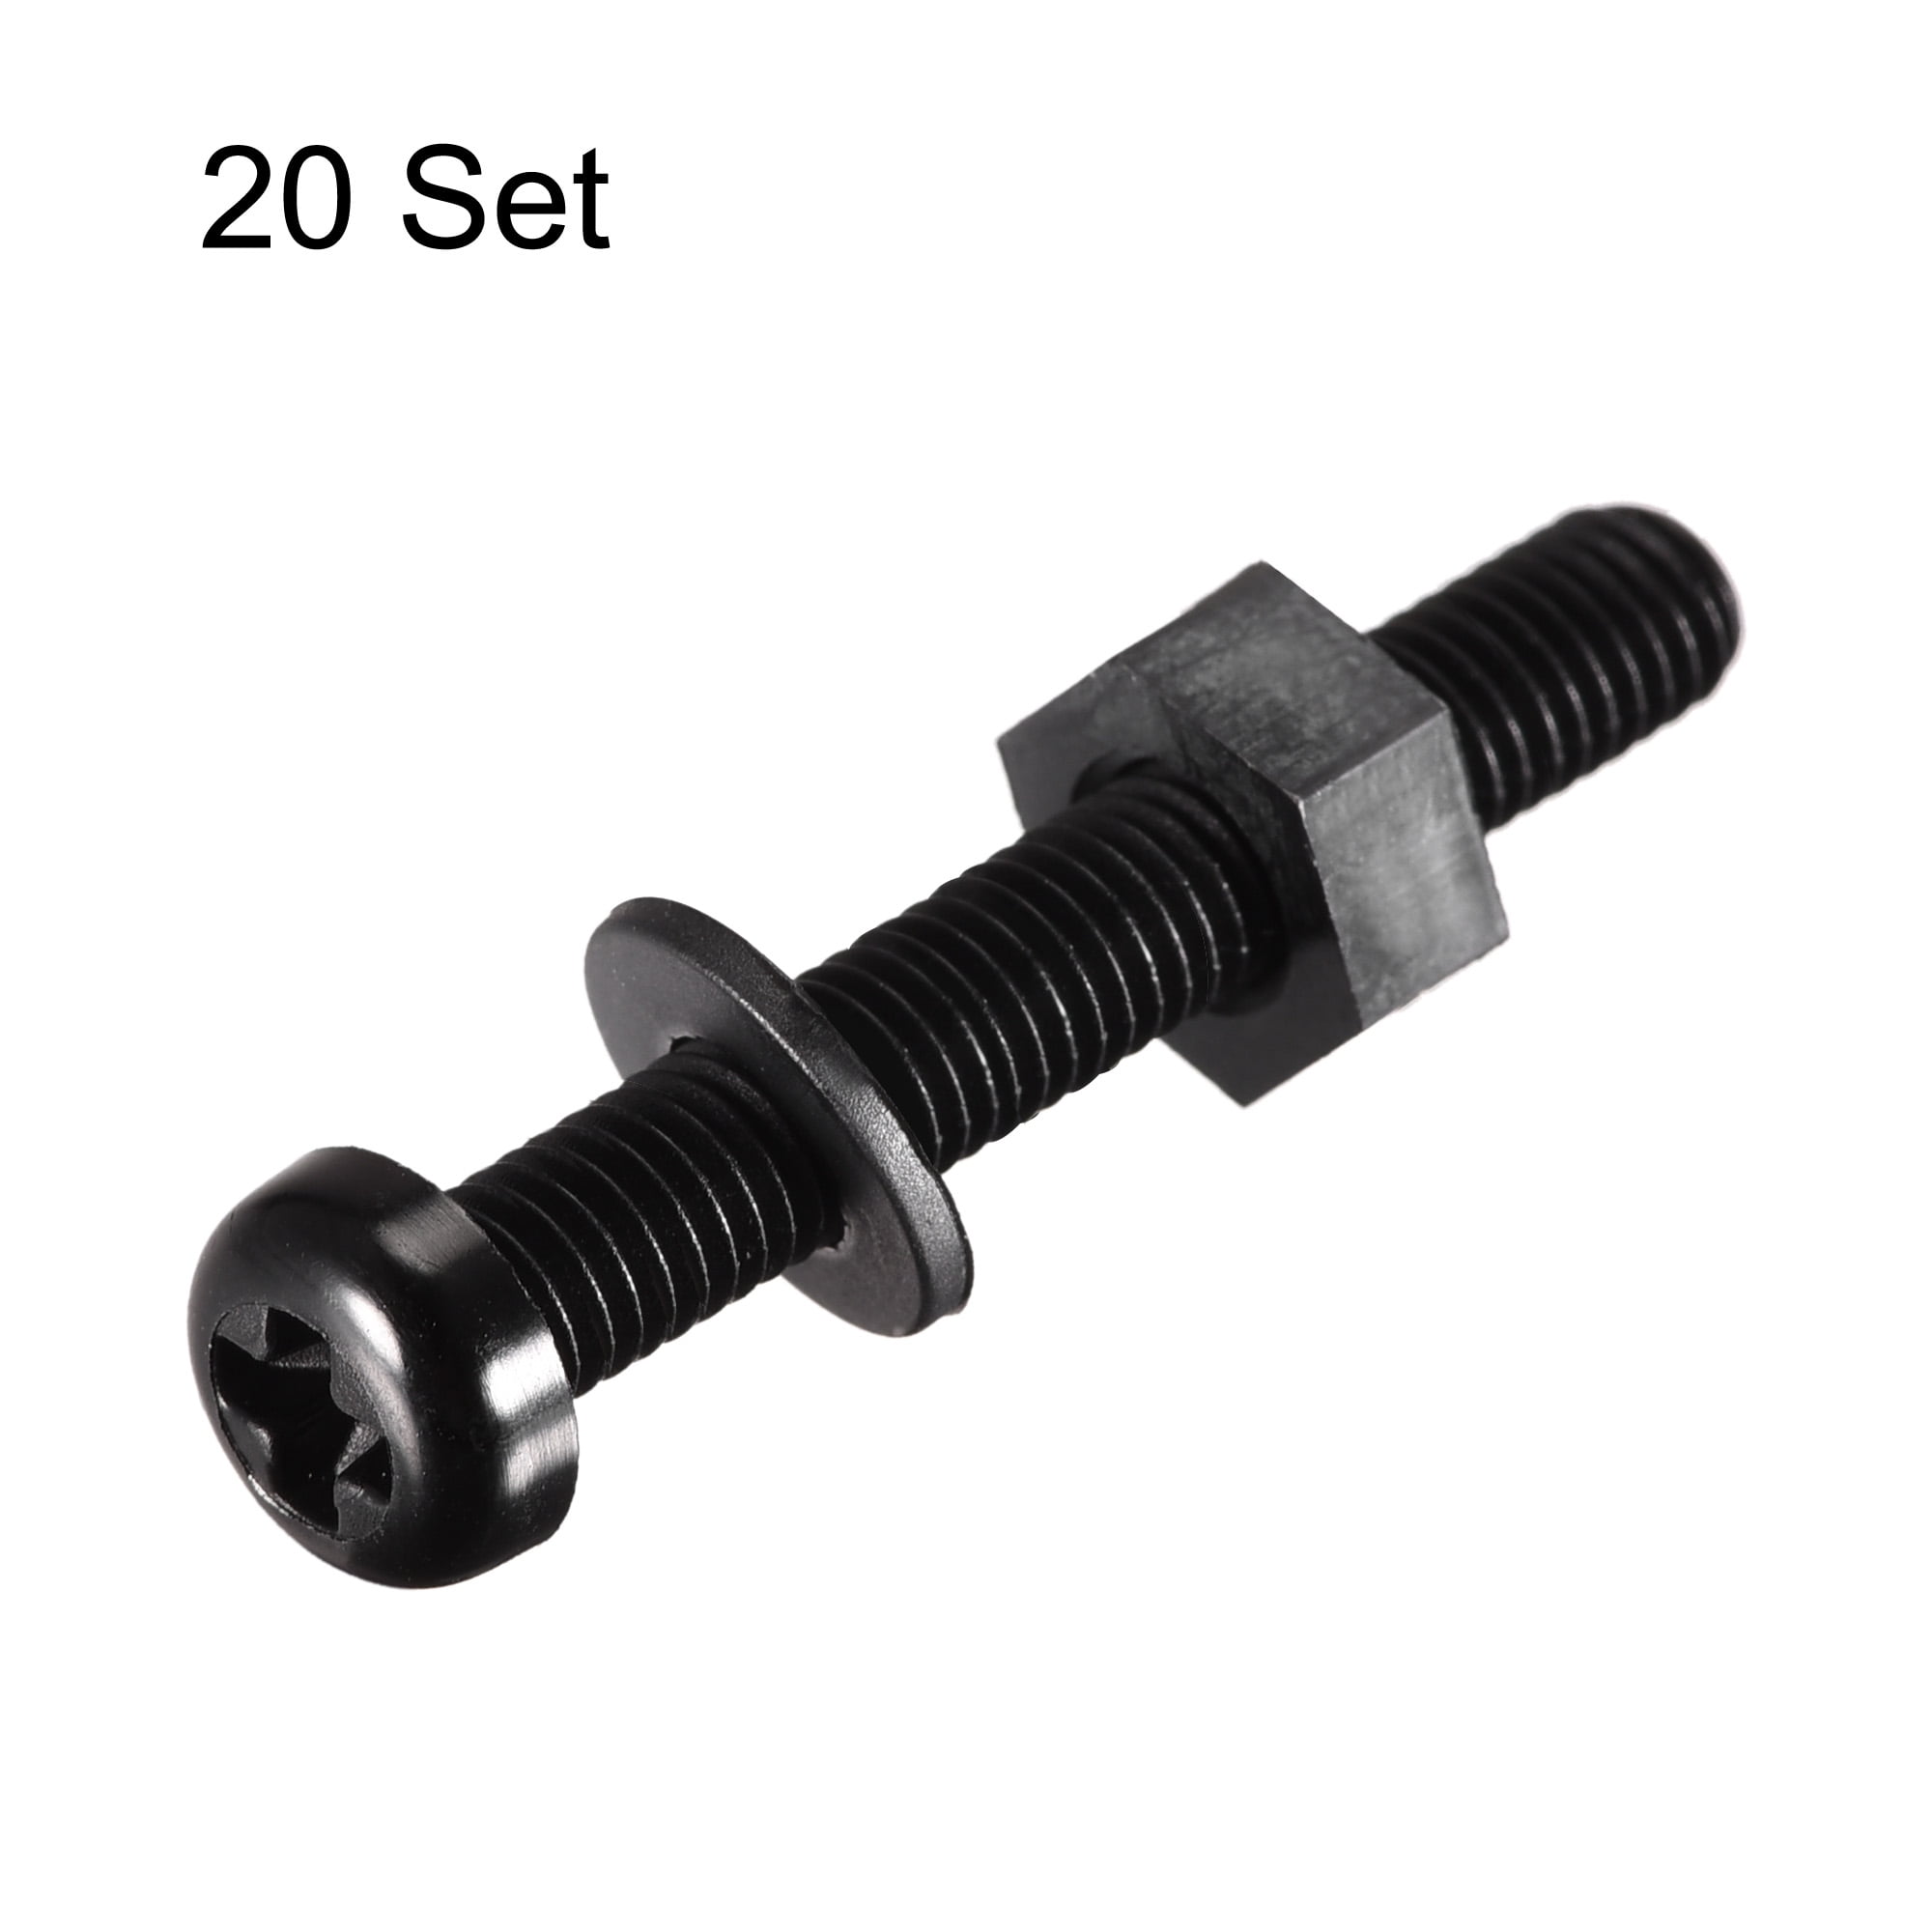 M6x15mm Nylon Screw Nut Washer Assortment Kit Black 20 Set 